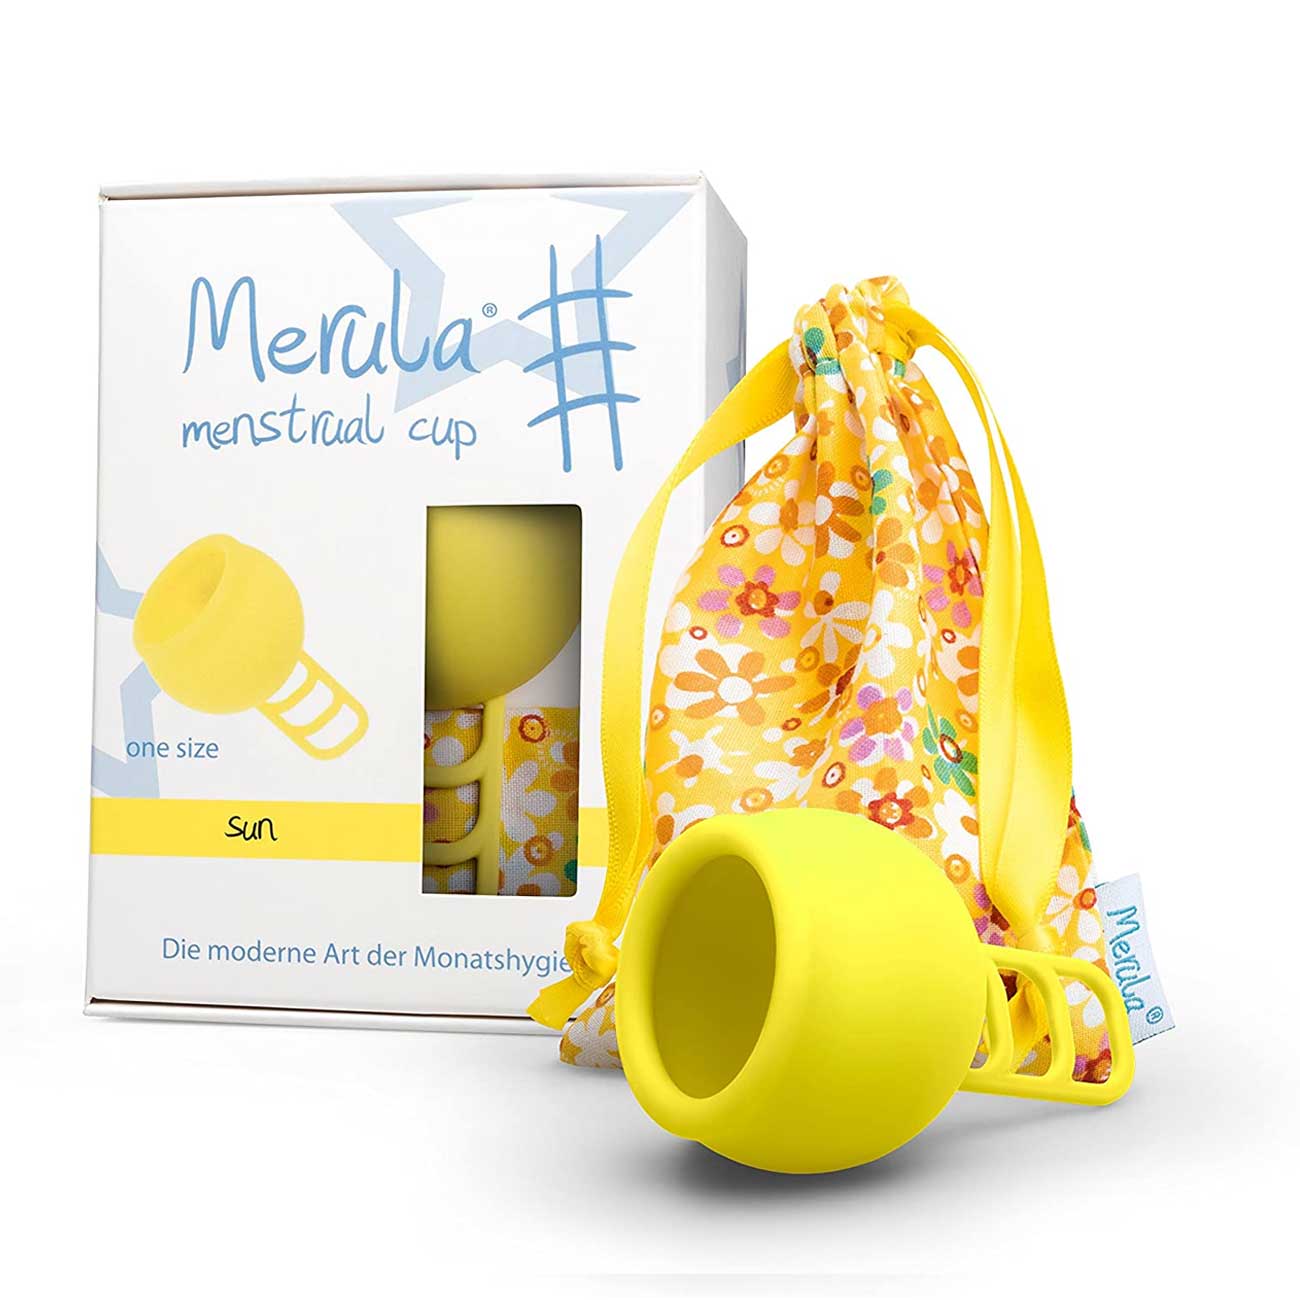 Merula Cup gelbe Menstruationstasse